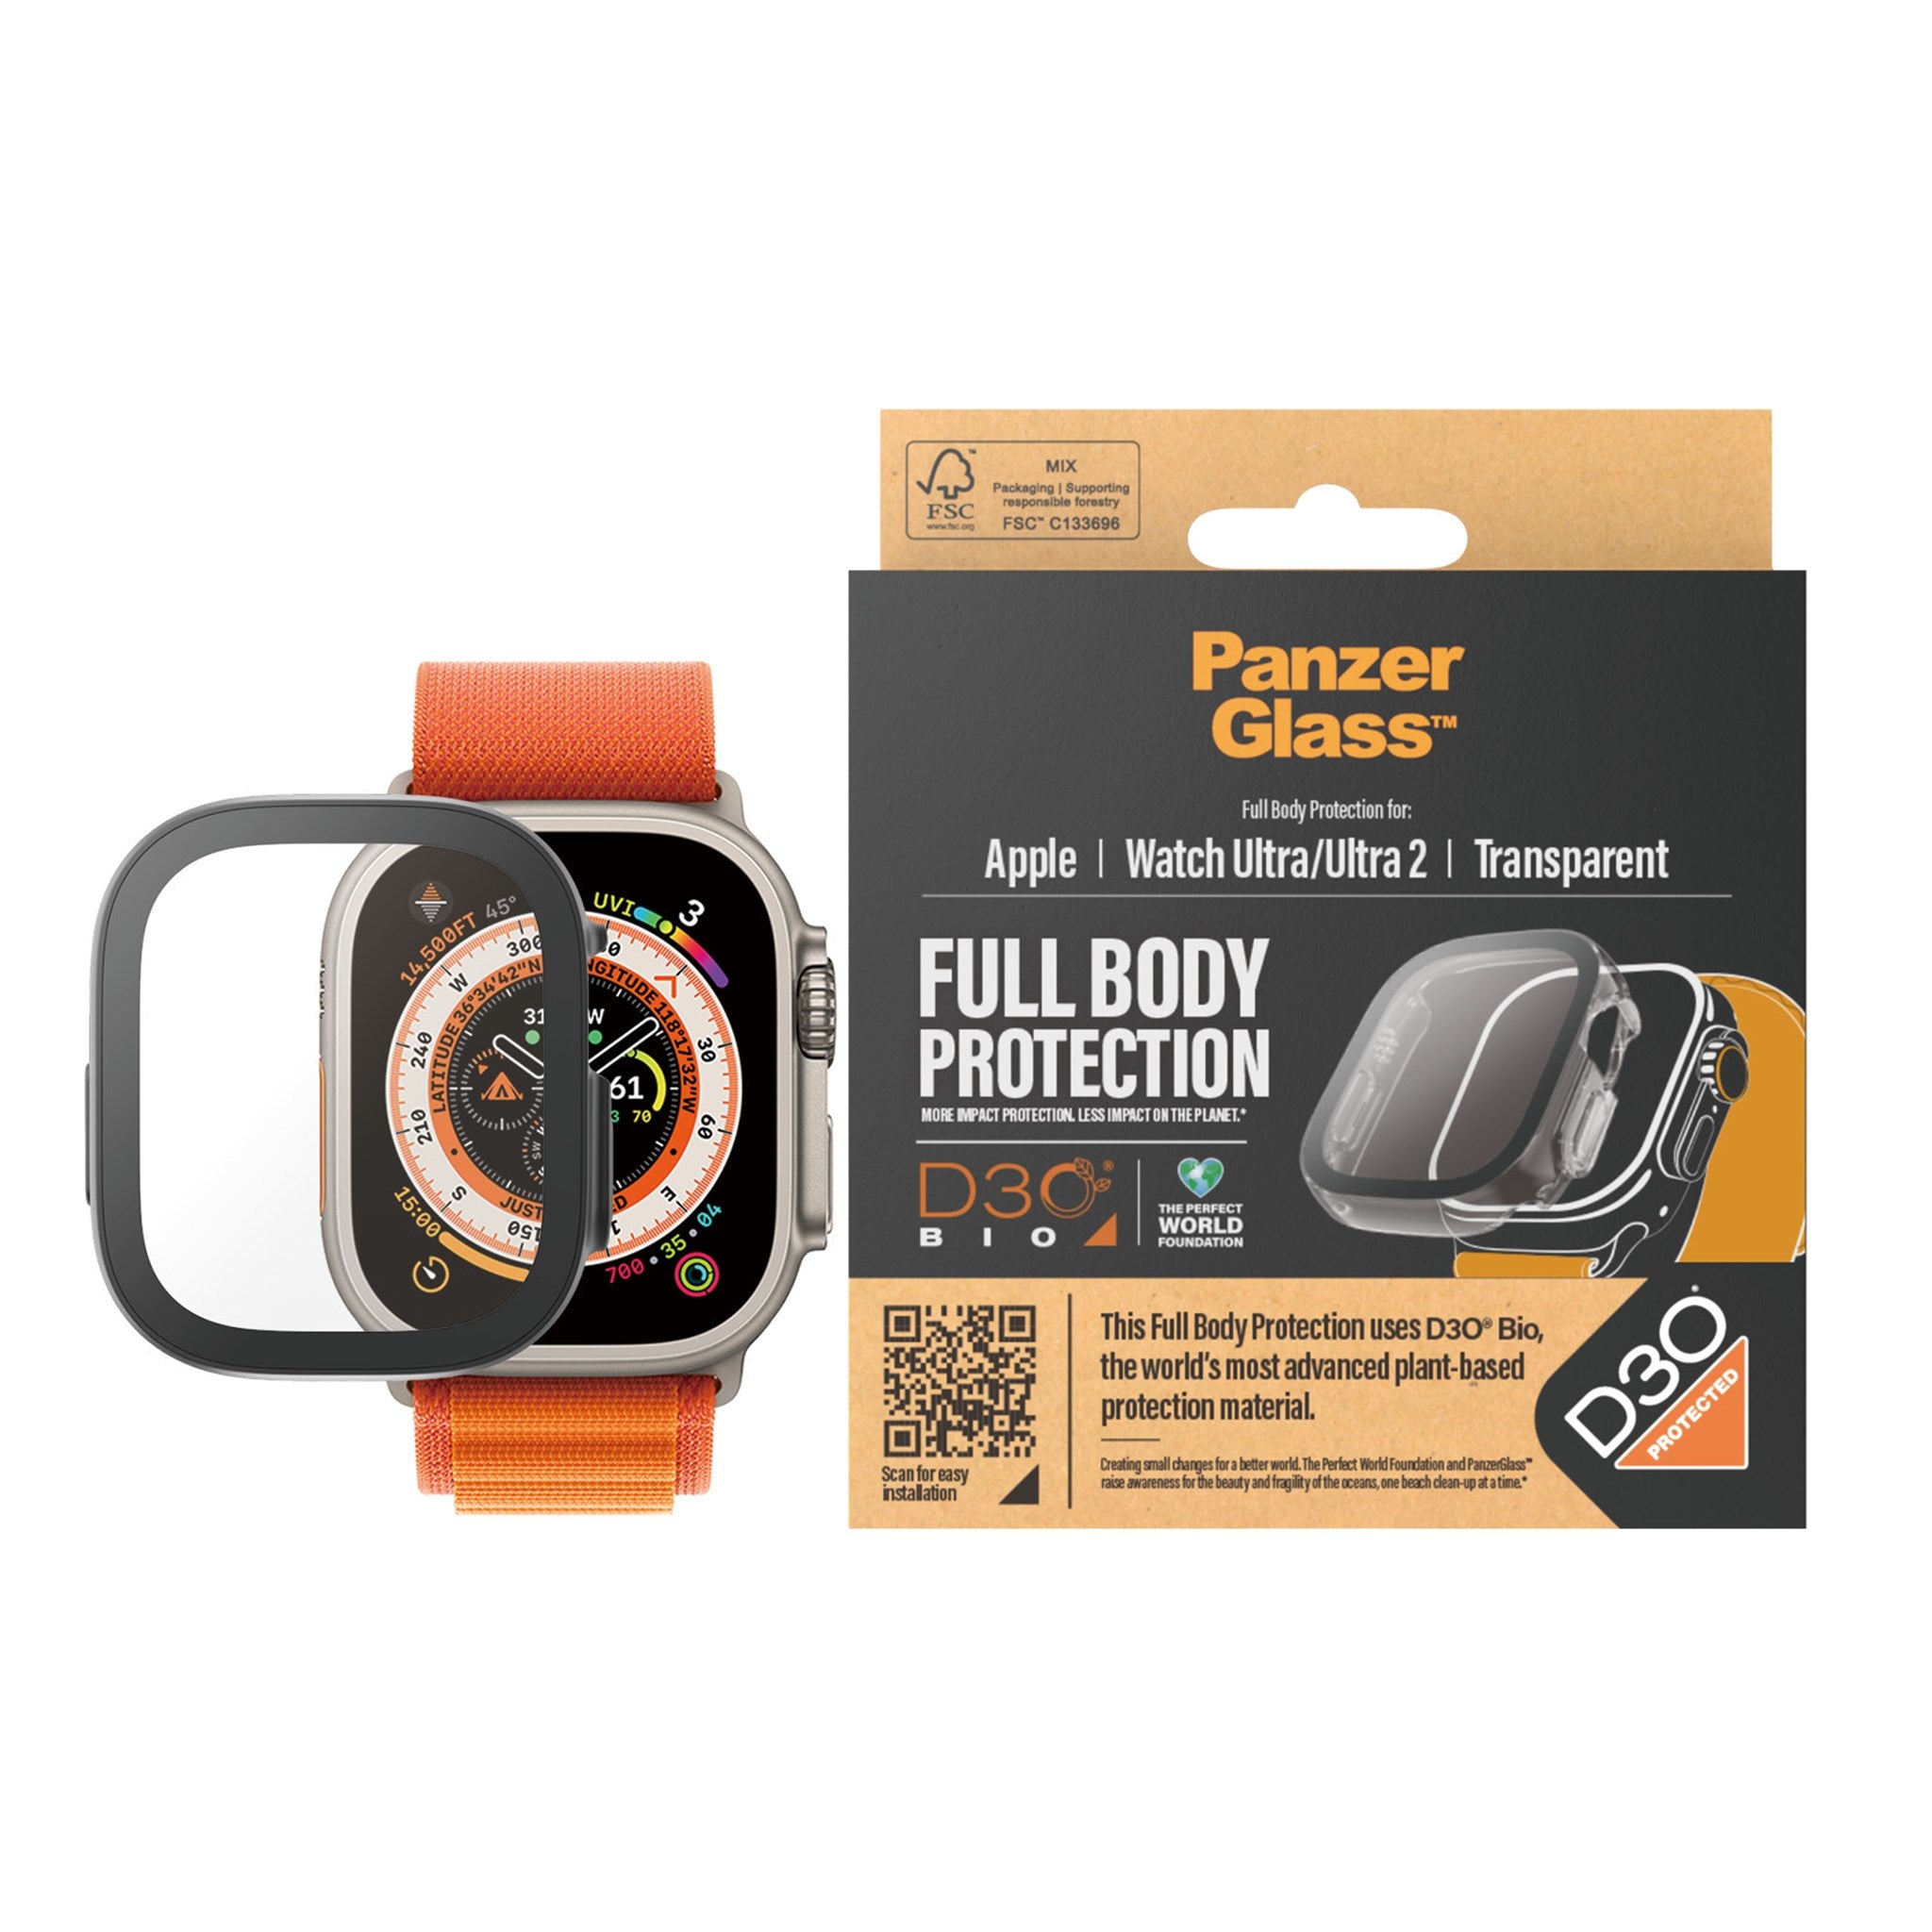 Panzer glass Protector Pantalla Smartwatch Watch Ultra 49 mm Dorado